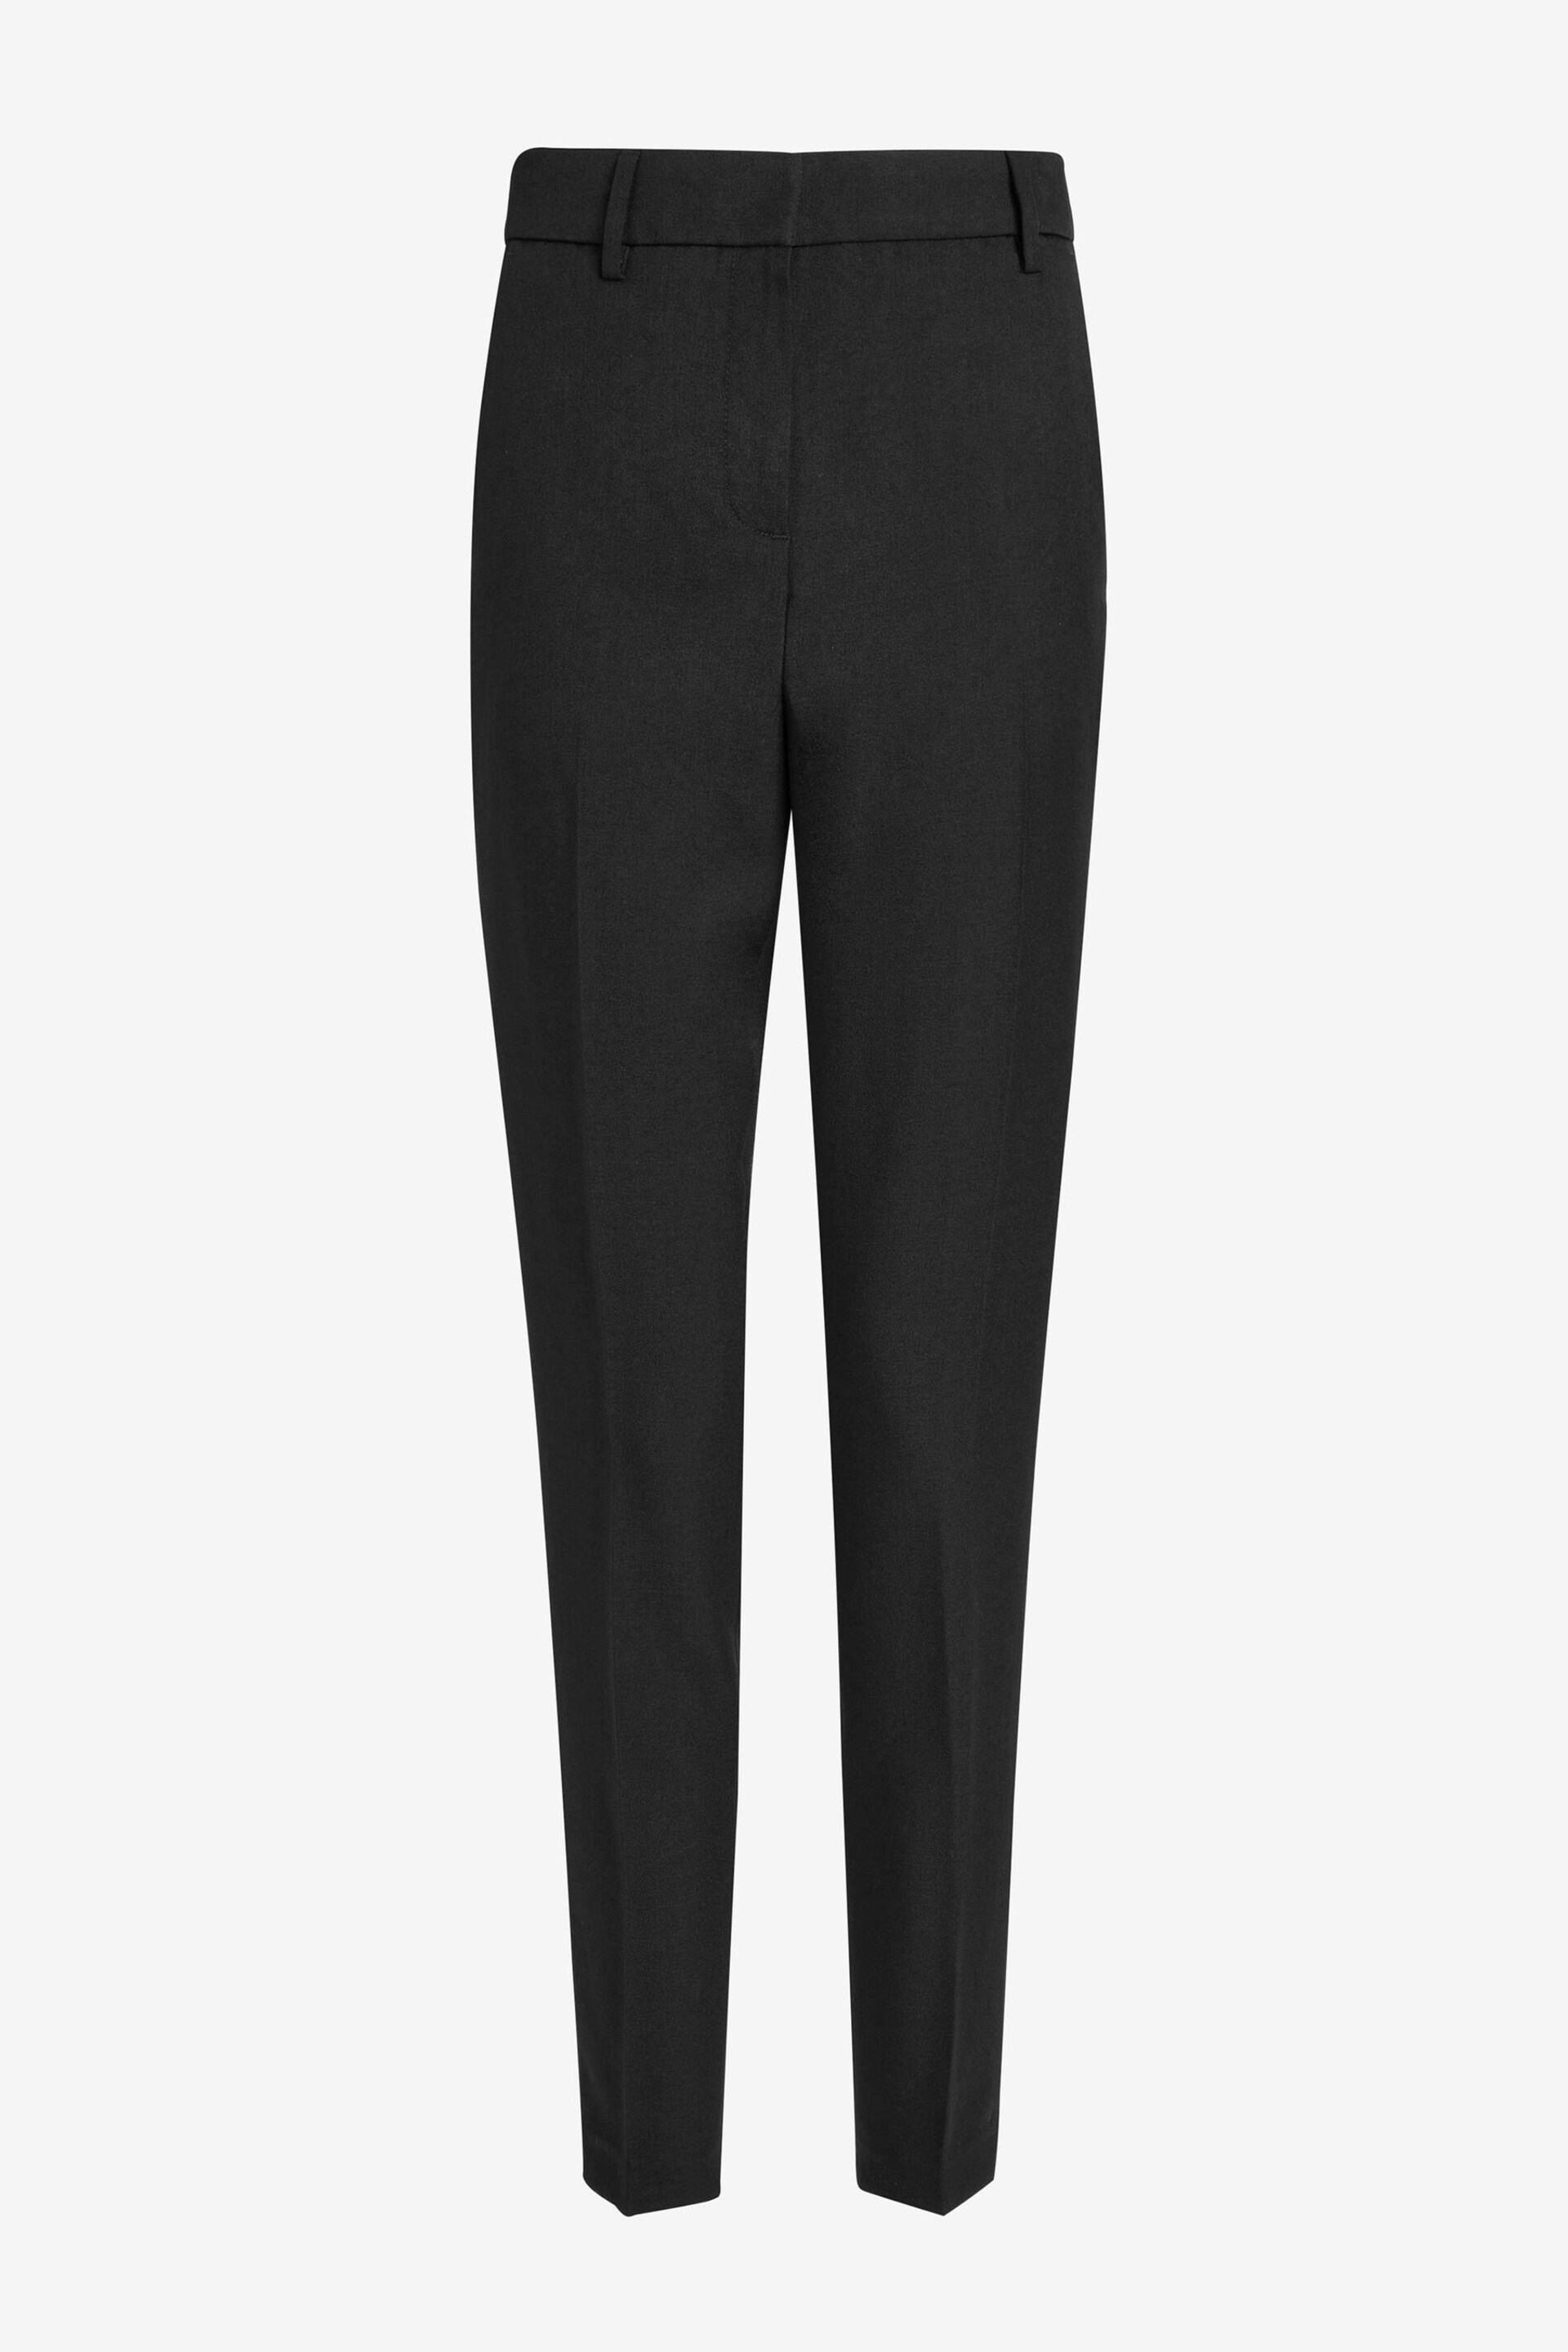 Black Slim Trousers - Image 3 of 3